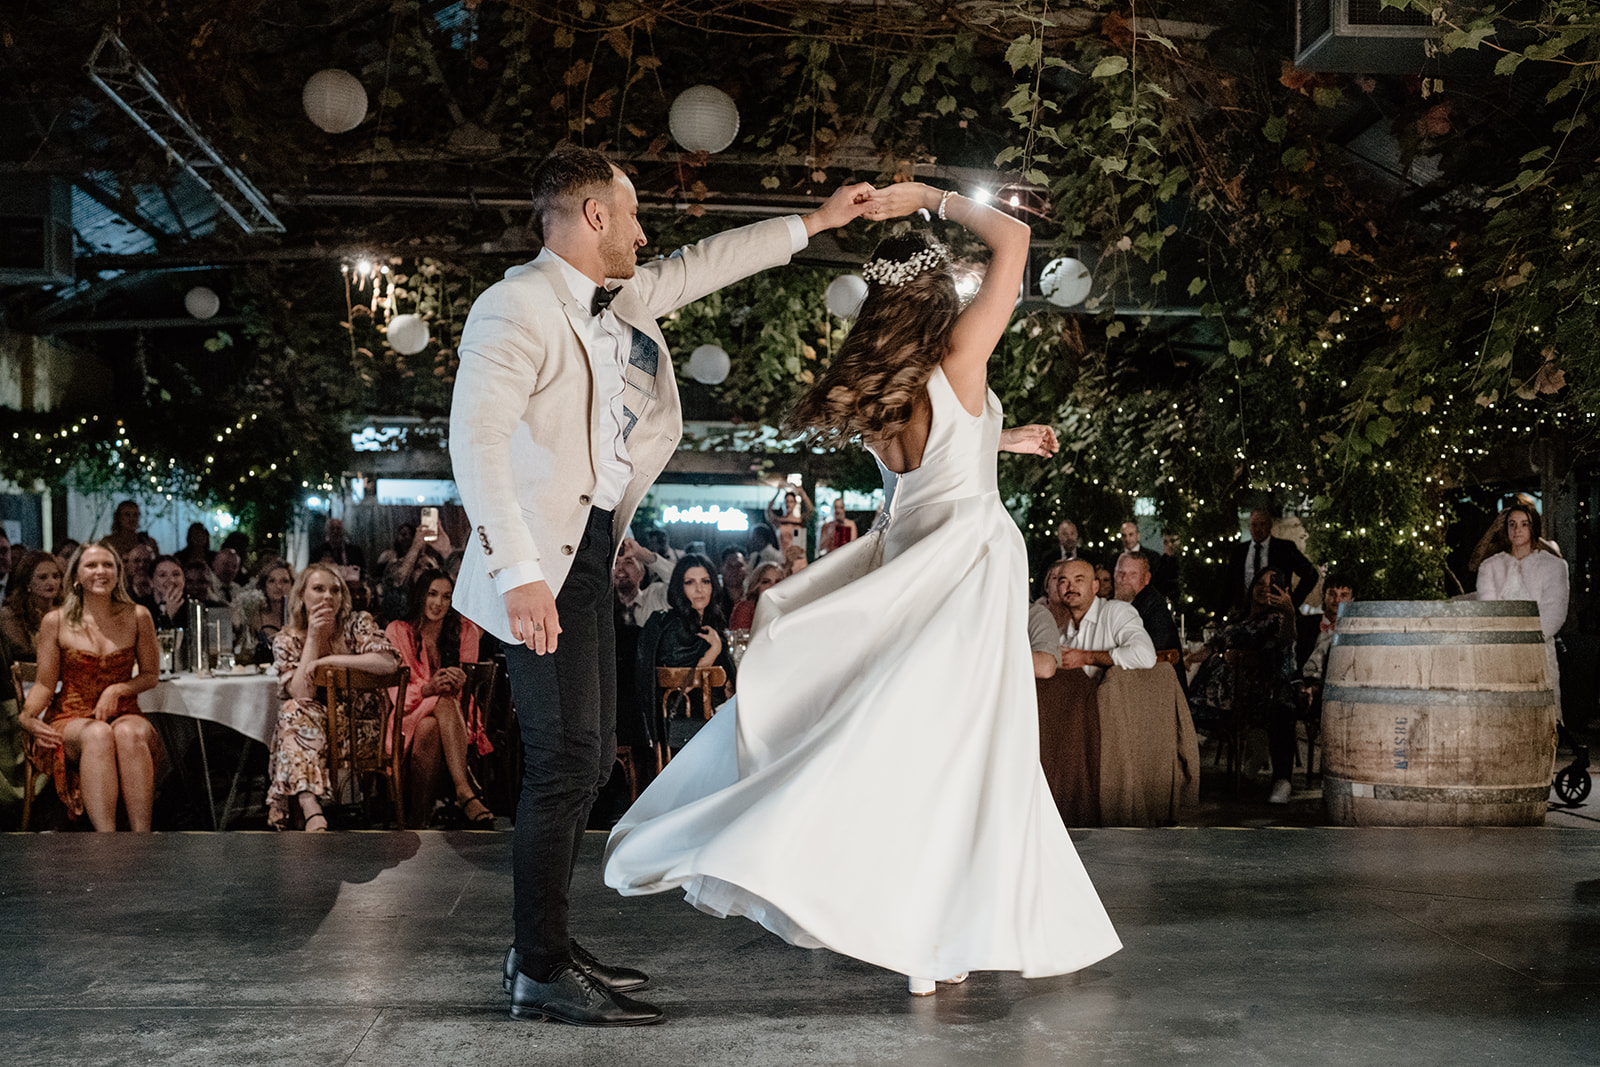 Bride and groom dancing, Radcliffe's. Indoor wedding reception at Radcliffe's Conservatory Garden. Echuca wedding.